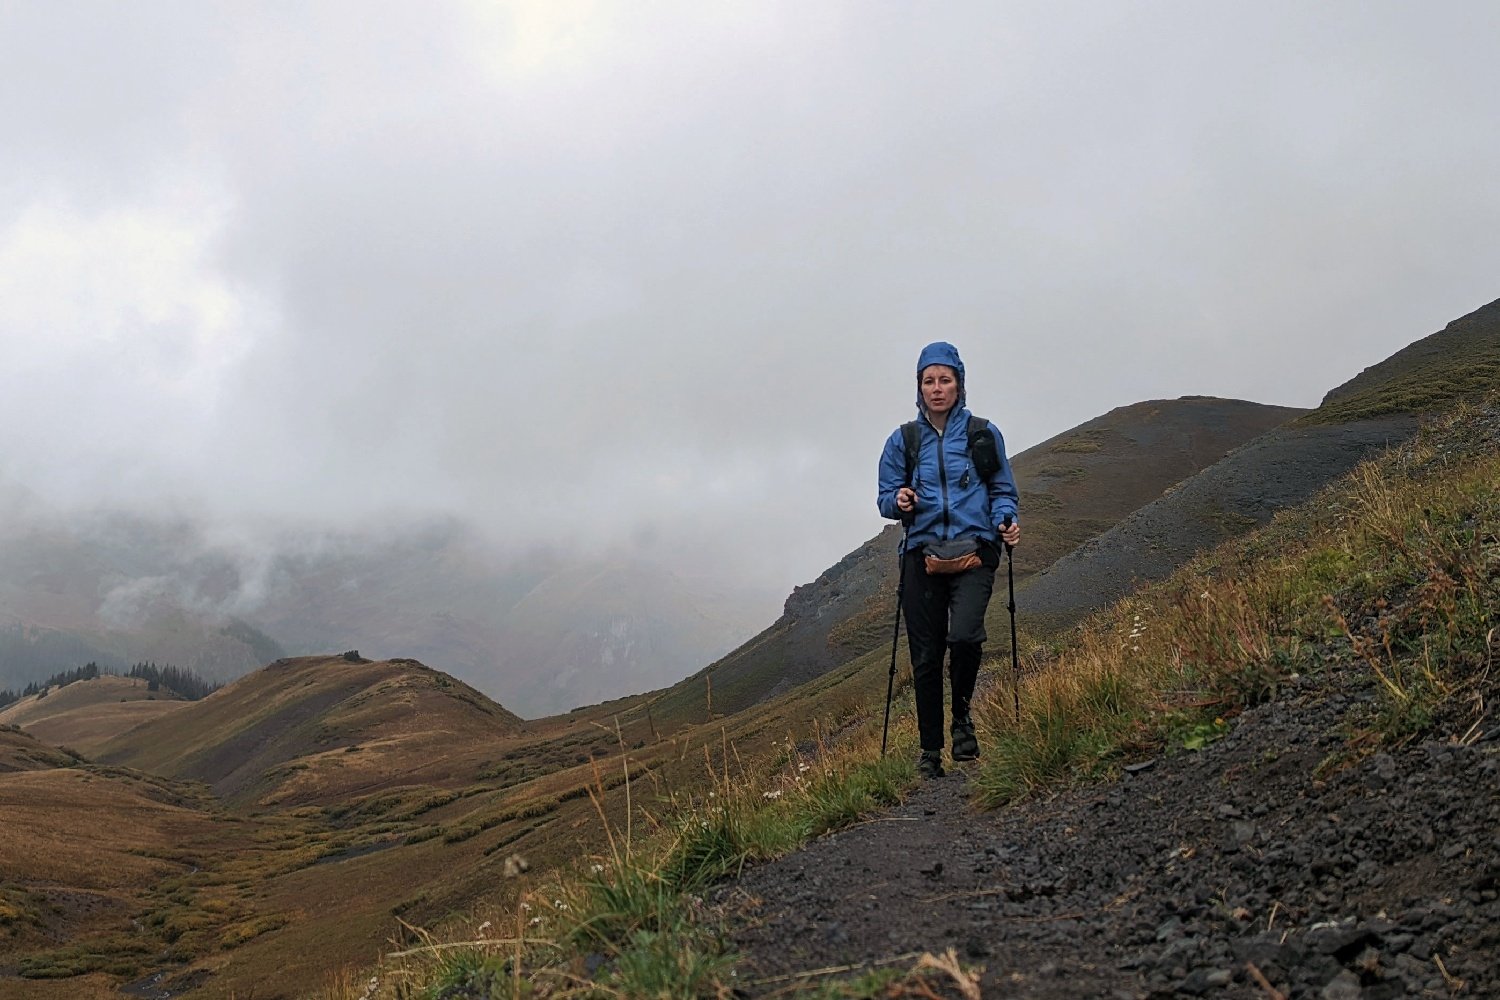 A hiker walking on a mountain trail wearing the Enlightened Equipment Visp rain jacket in the rain